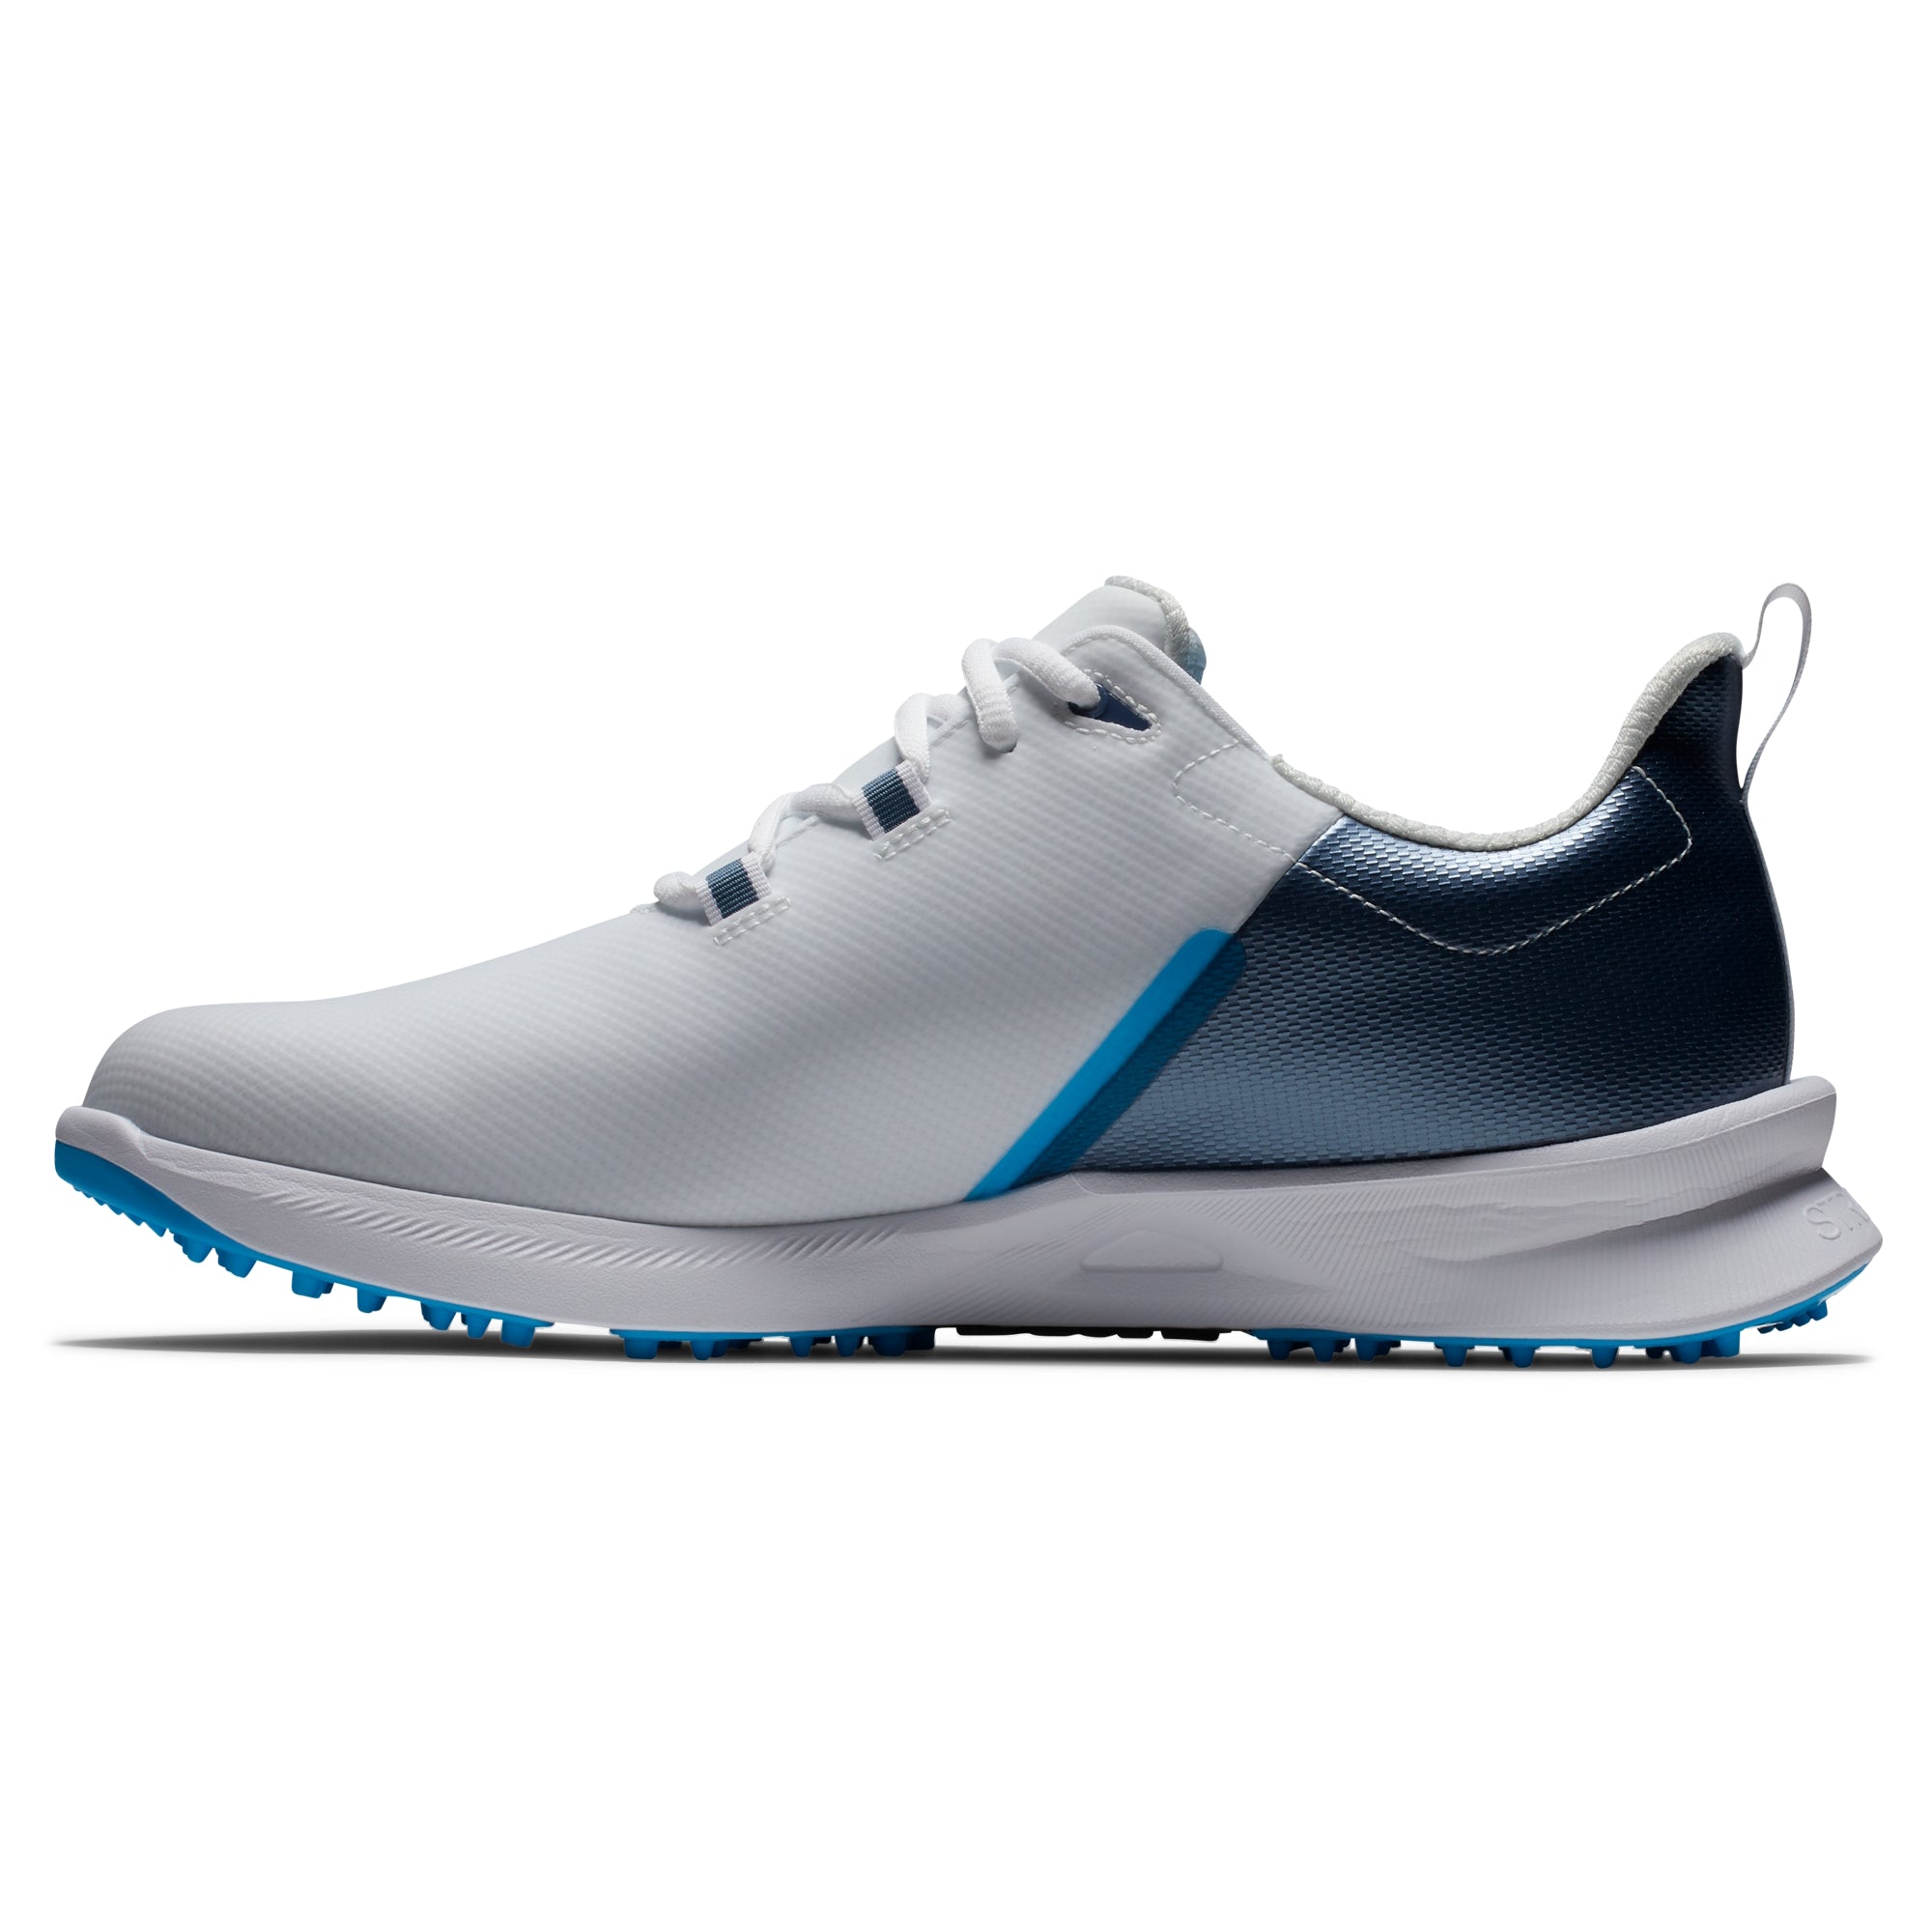 FootJoy Fuel Men's Golf Shoes 55454 - Navy/White/Blue